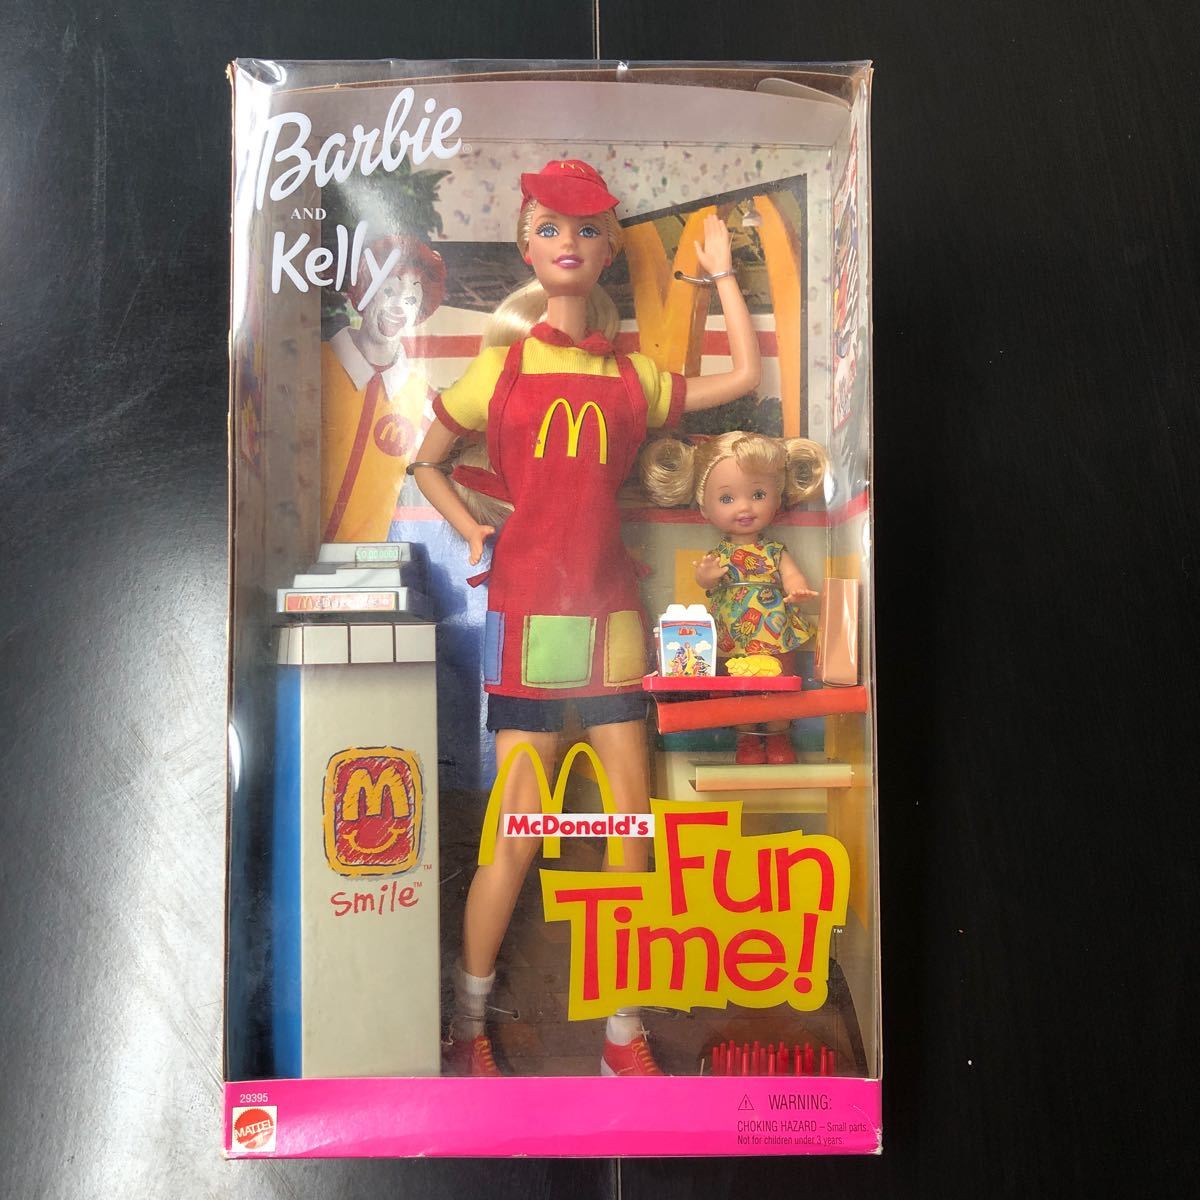 Barbie バービー and Kelly McDonald's マクドナルド Fun Time! Dolls Set 2001 ドール 人形 フィギの画像1